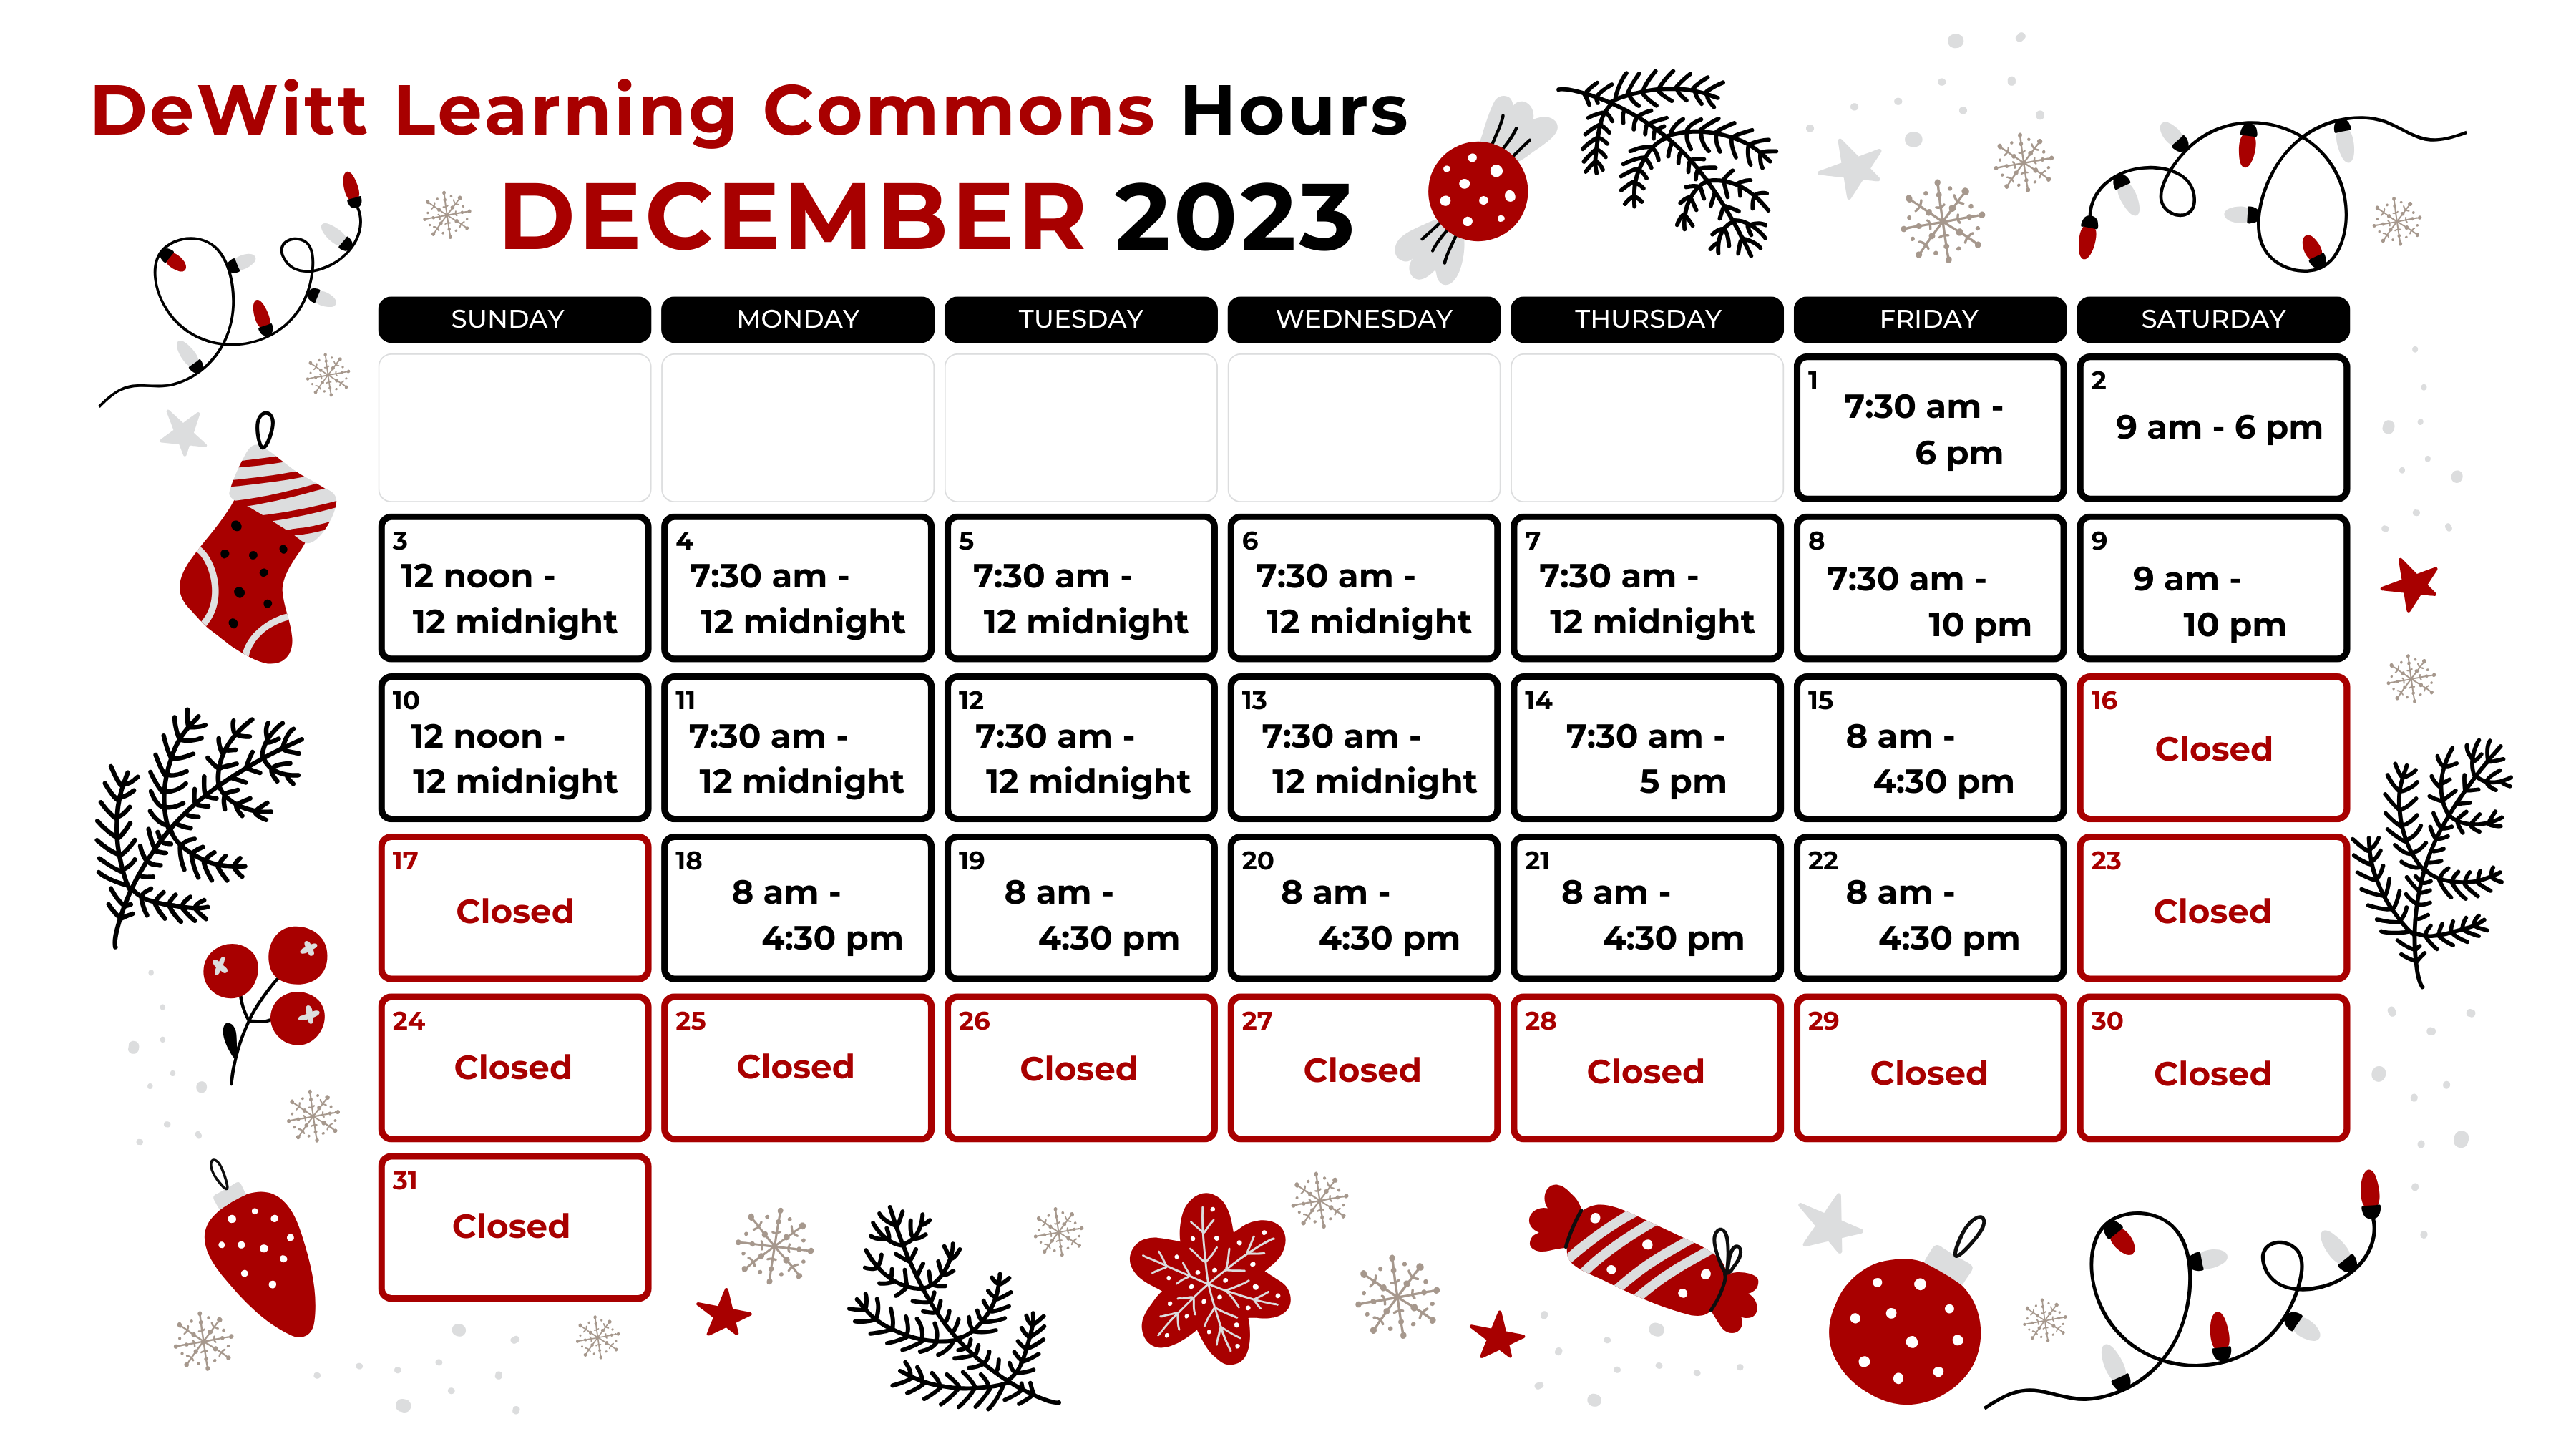 DeWitt Learning Commons Hours - December 2023